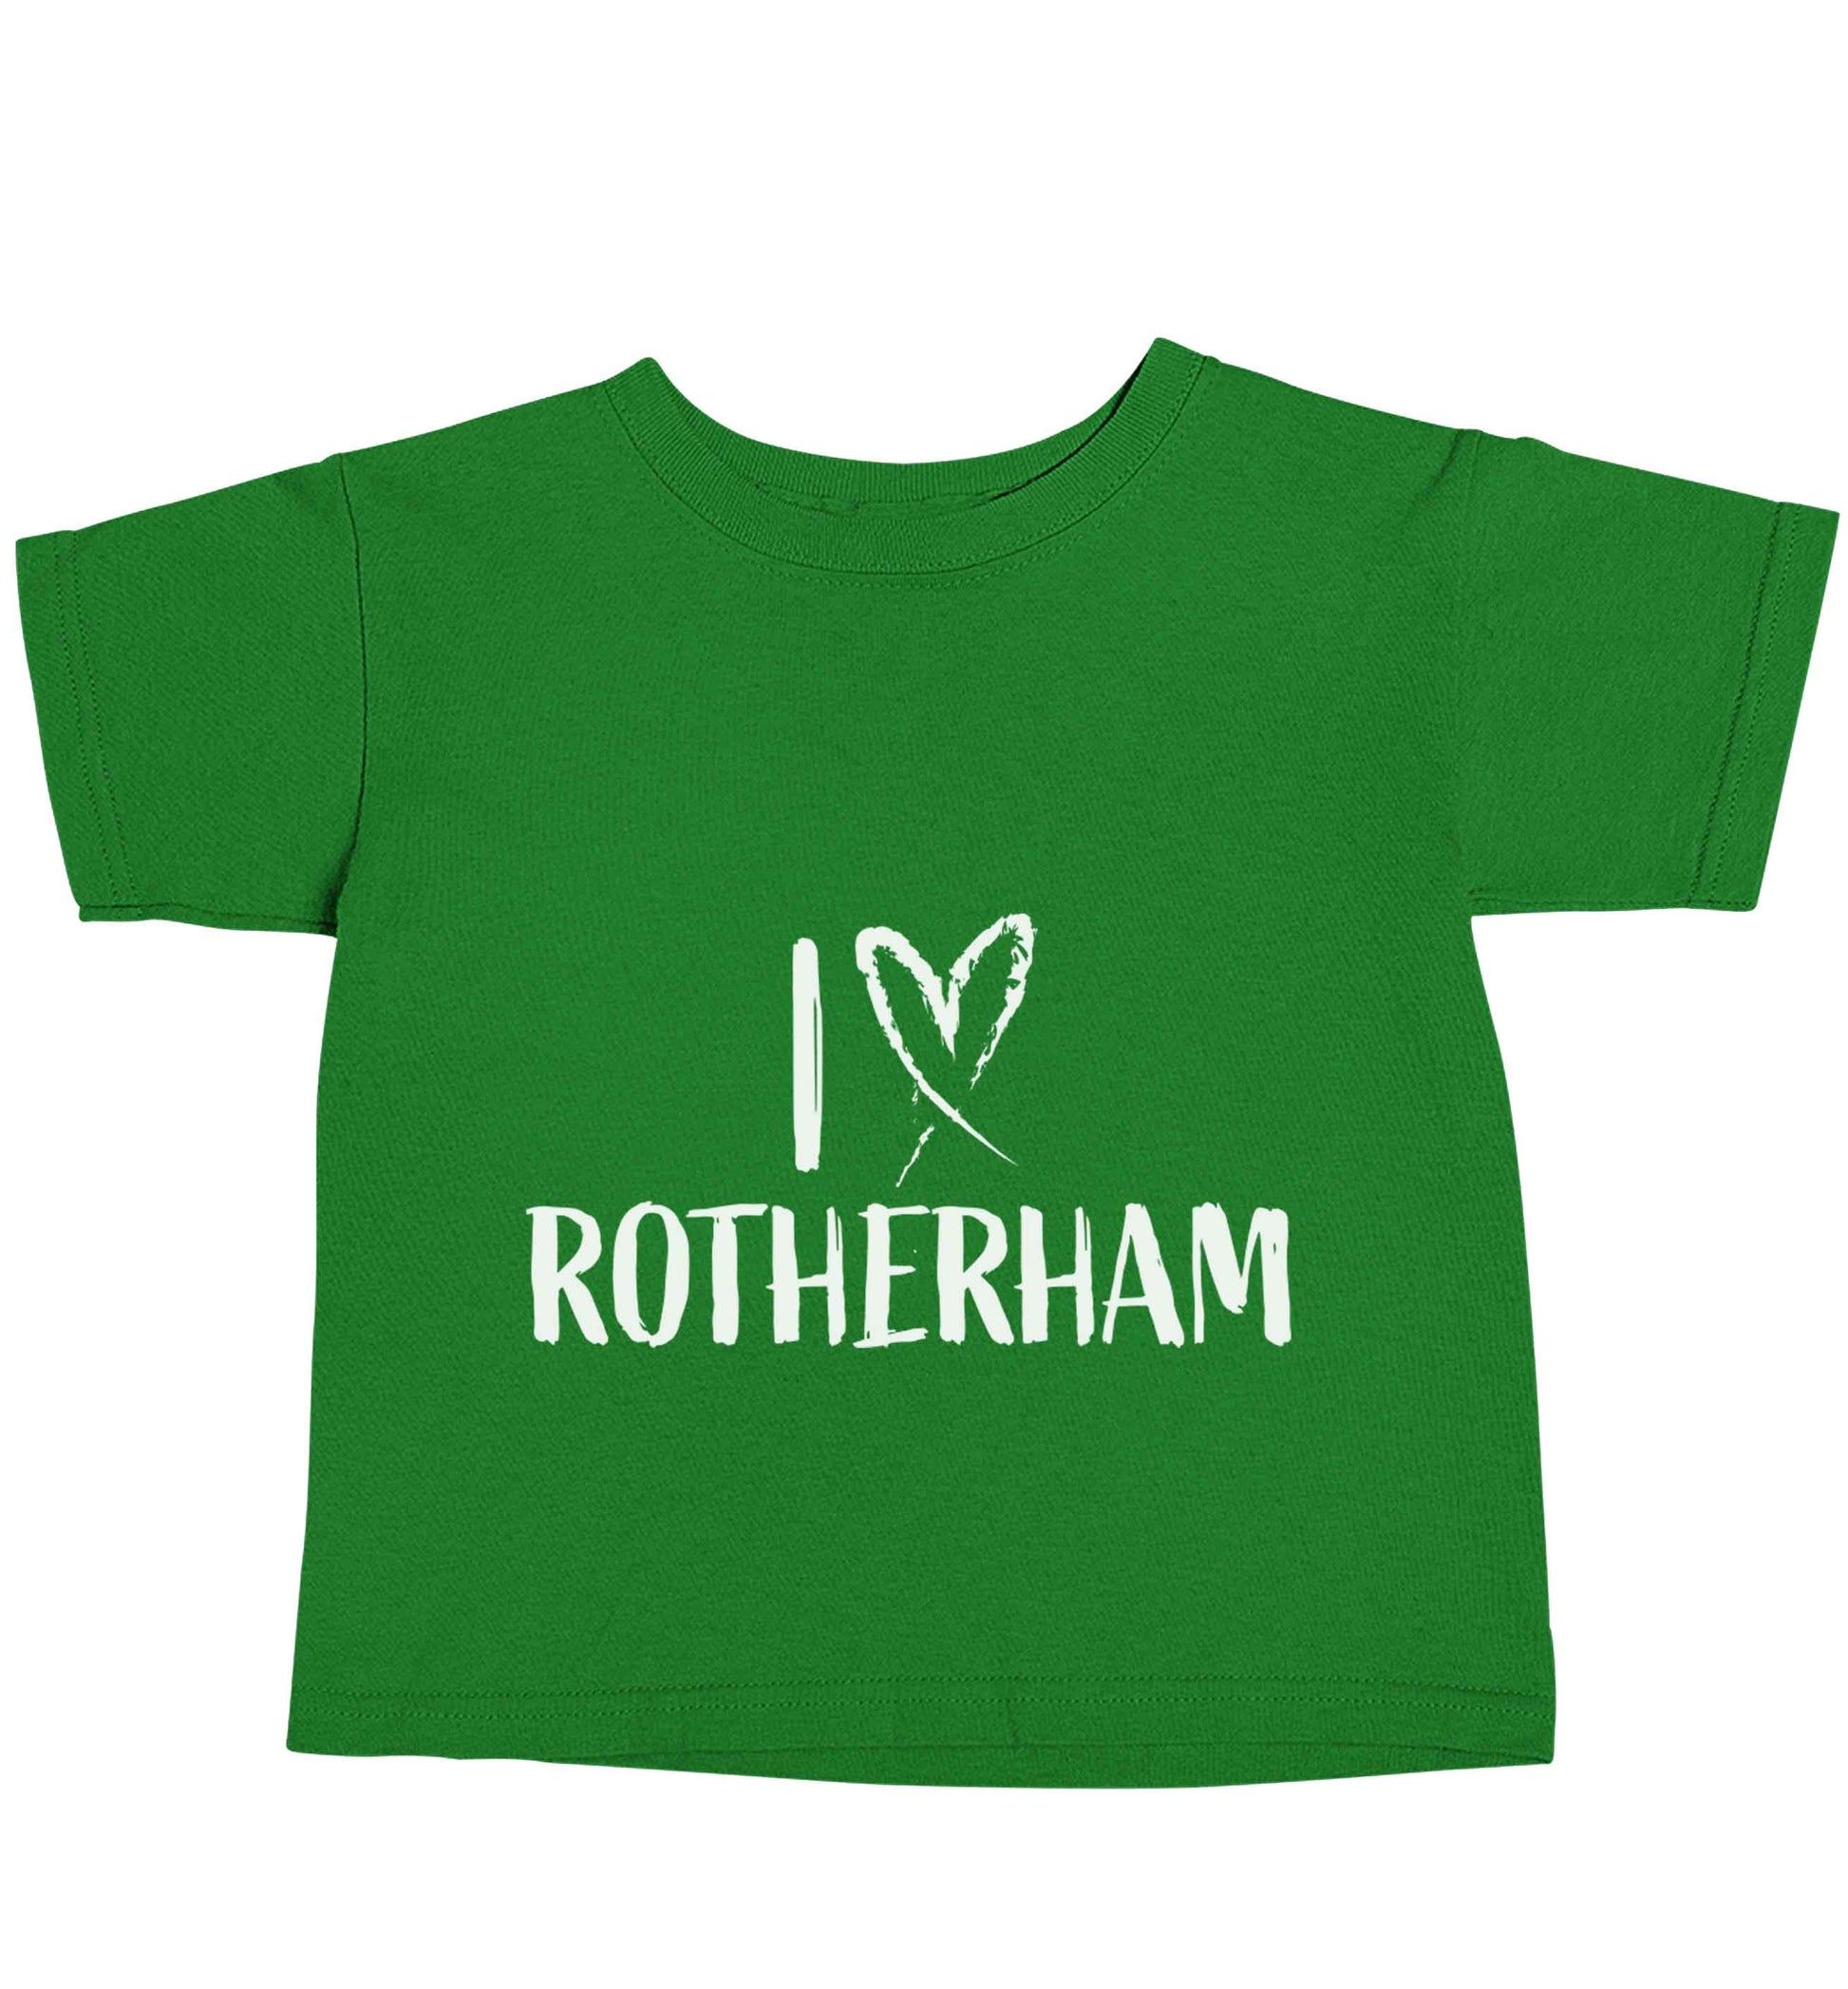 I love Rotherham green baby toddler Tshirt 2 Years